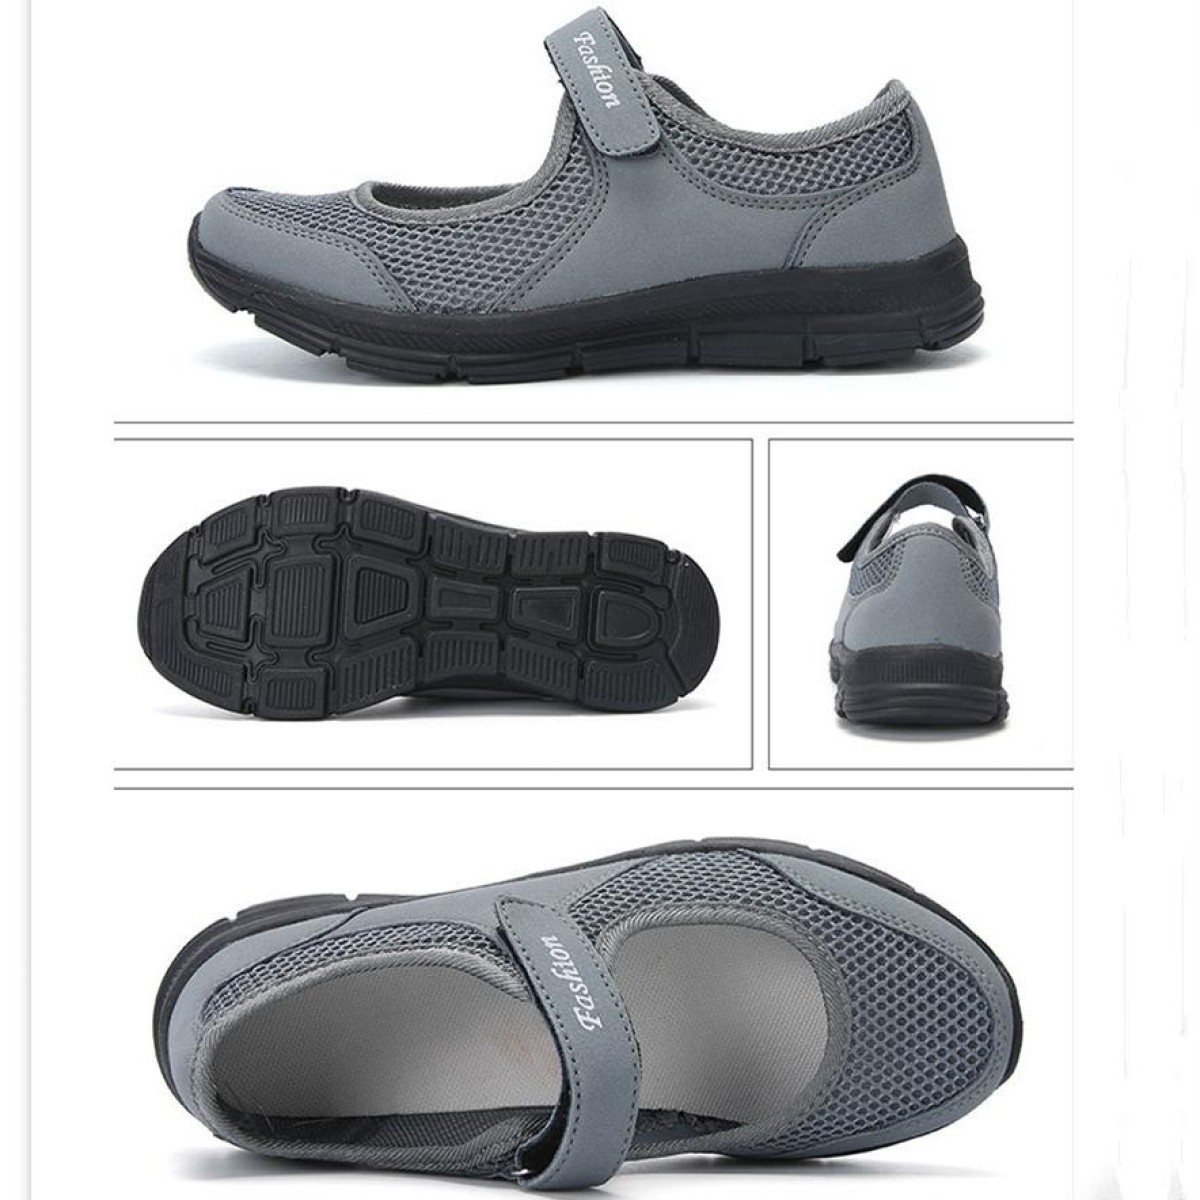 Women Casual Mesh Flat Shoes Soft Sneakers, Size:37(Dark gray)